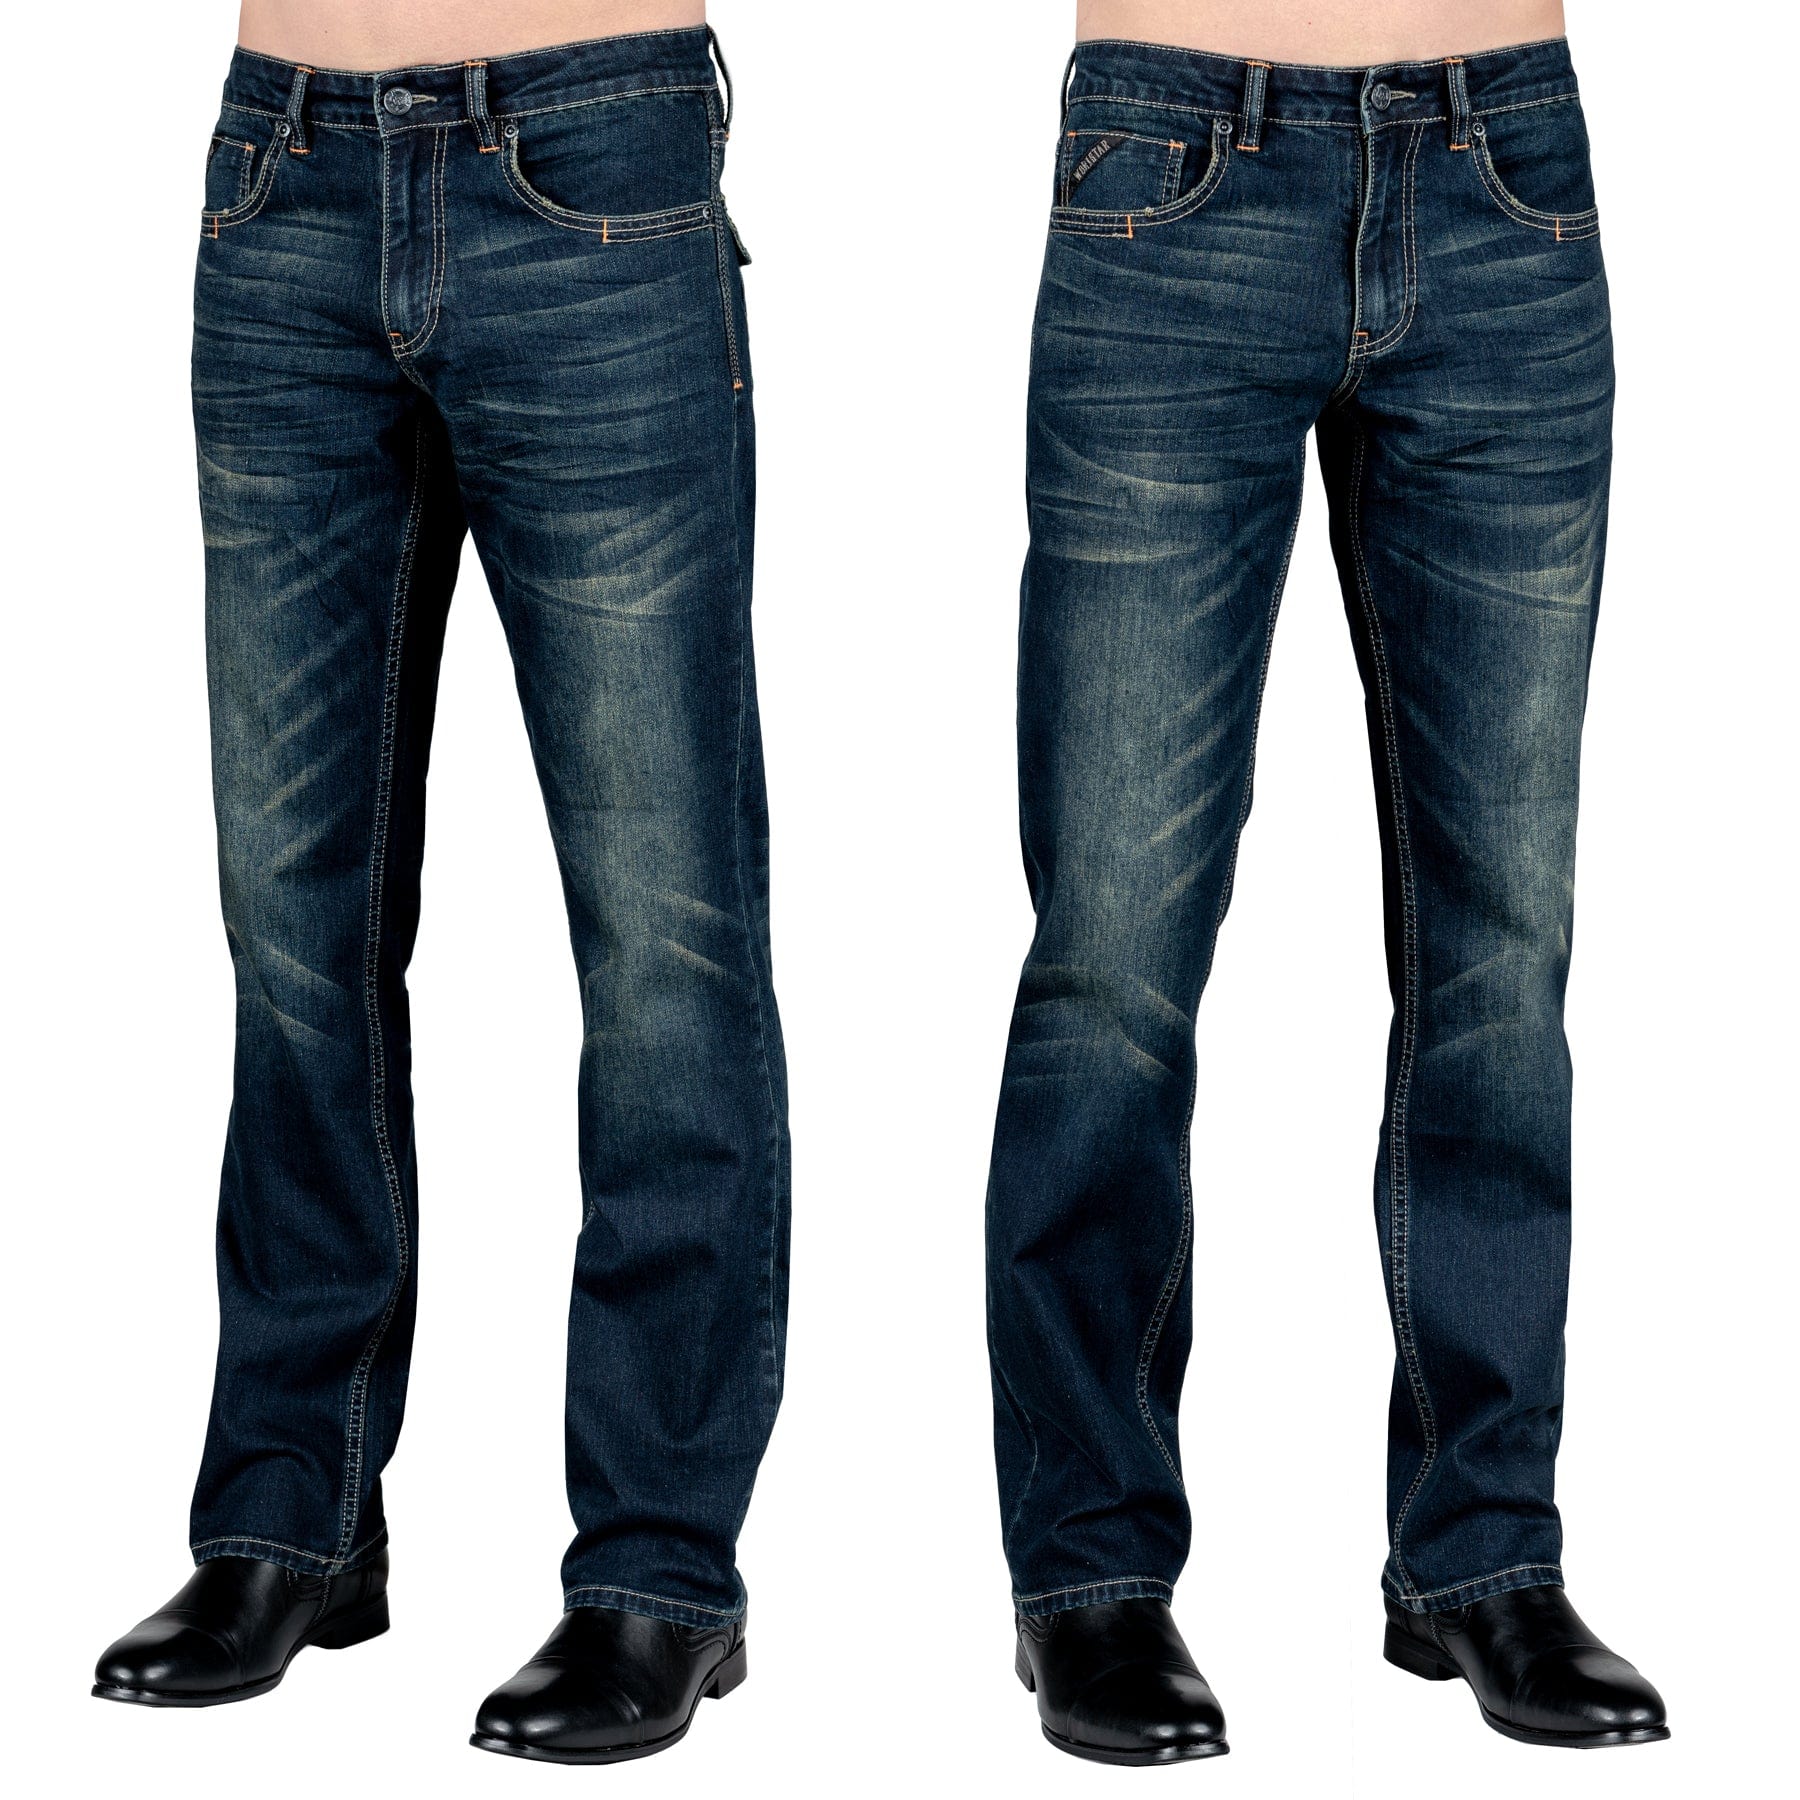 Wornstar Clothing Mens Jeans. Trailblazer Denim Pants - Midnight Blue